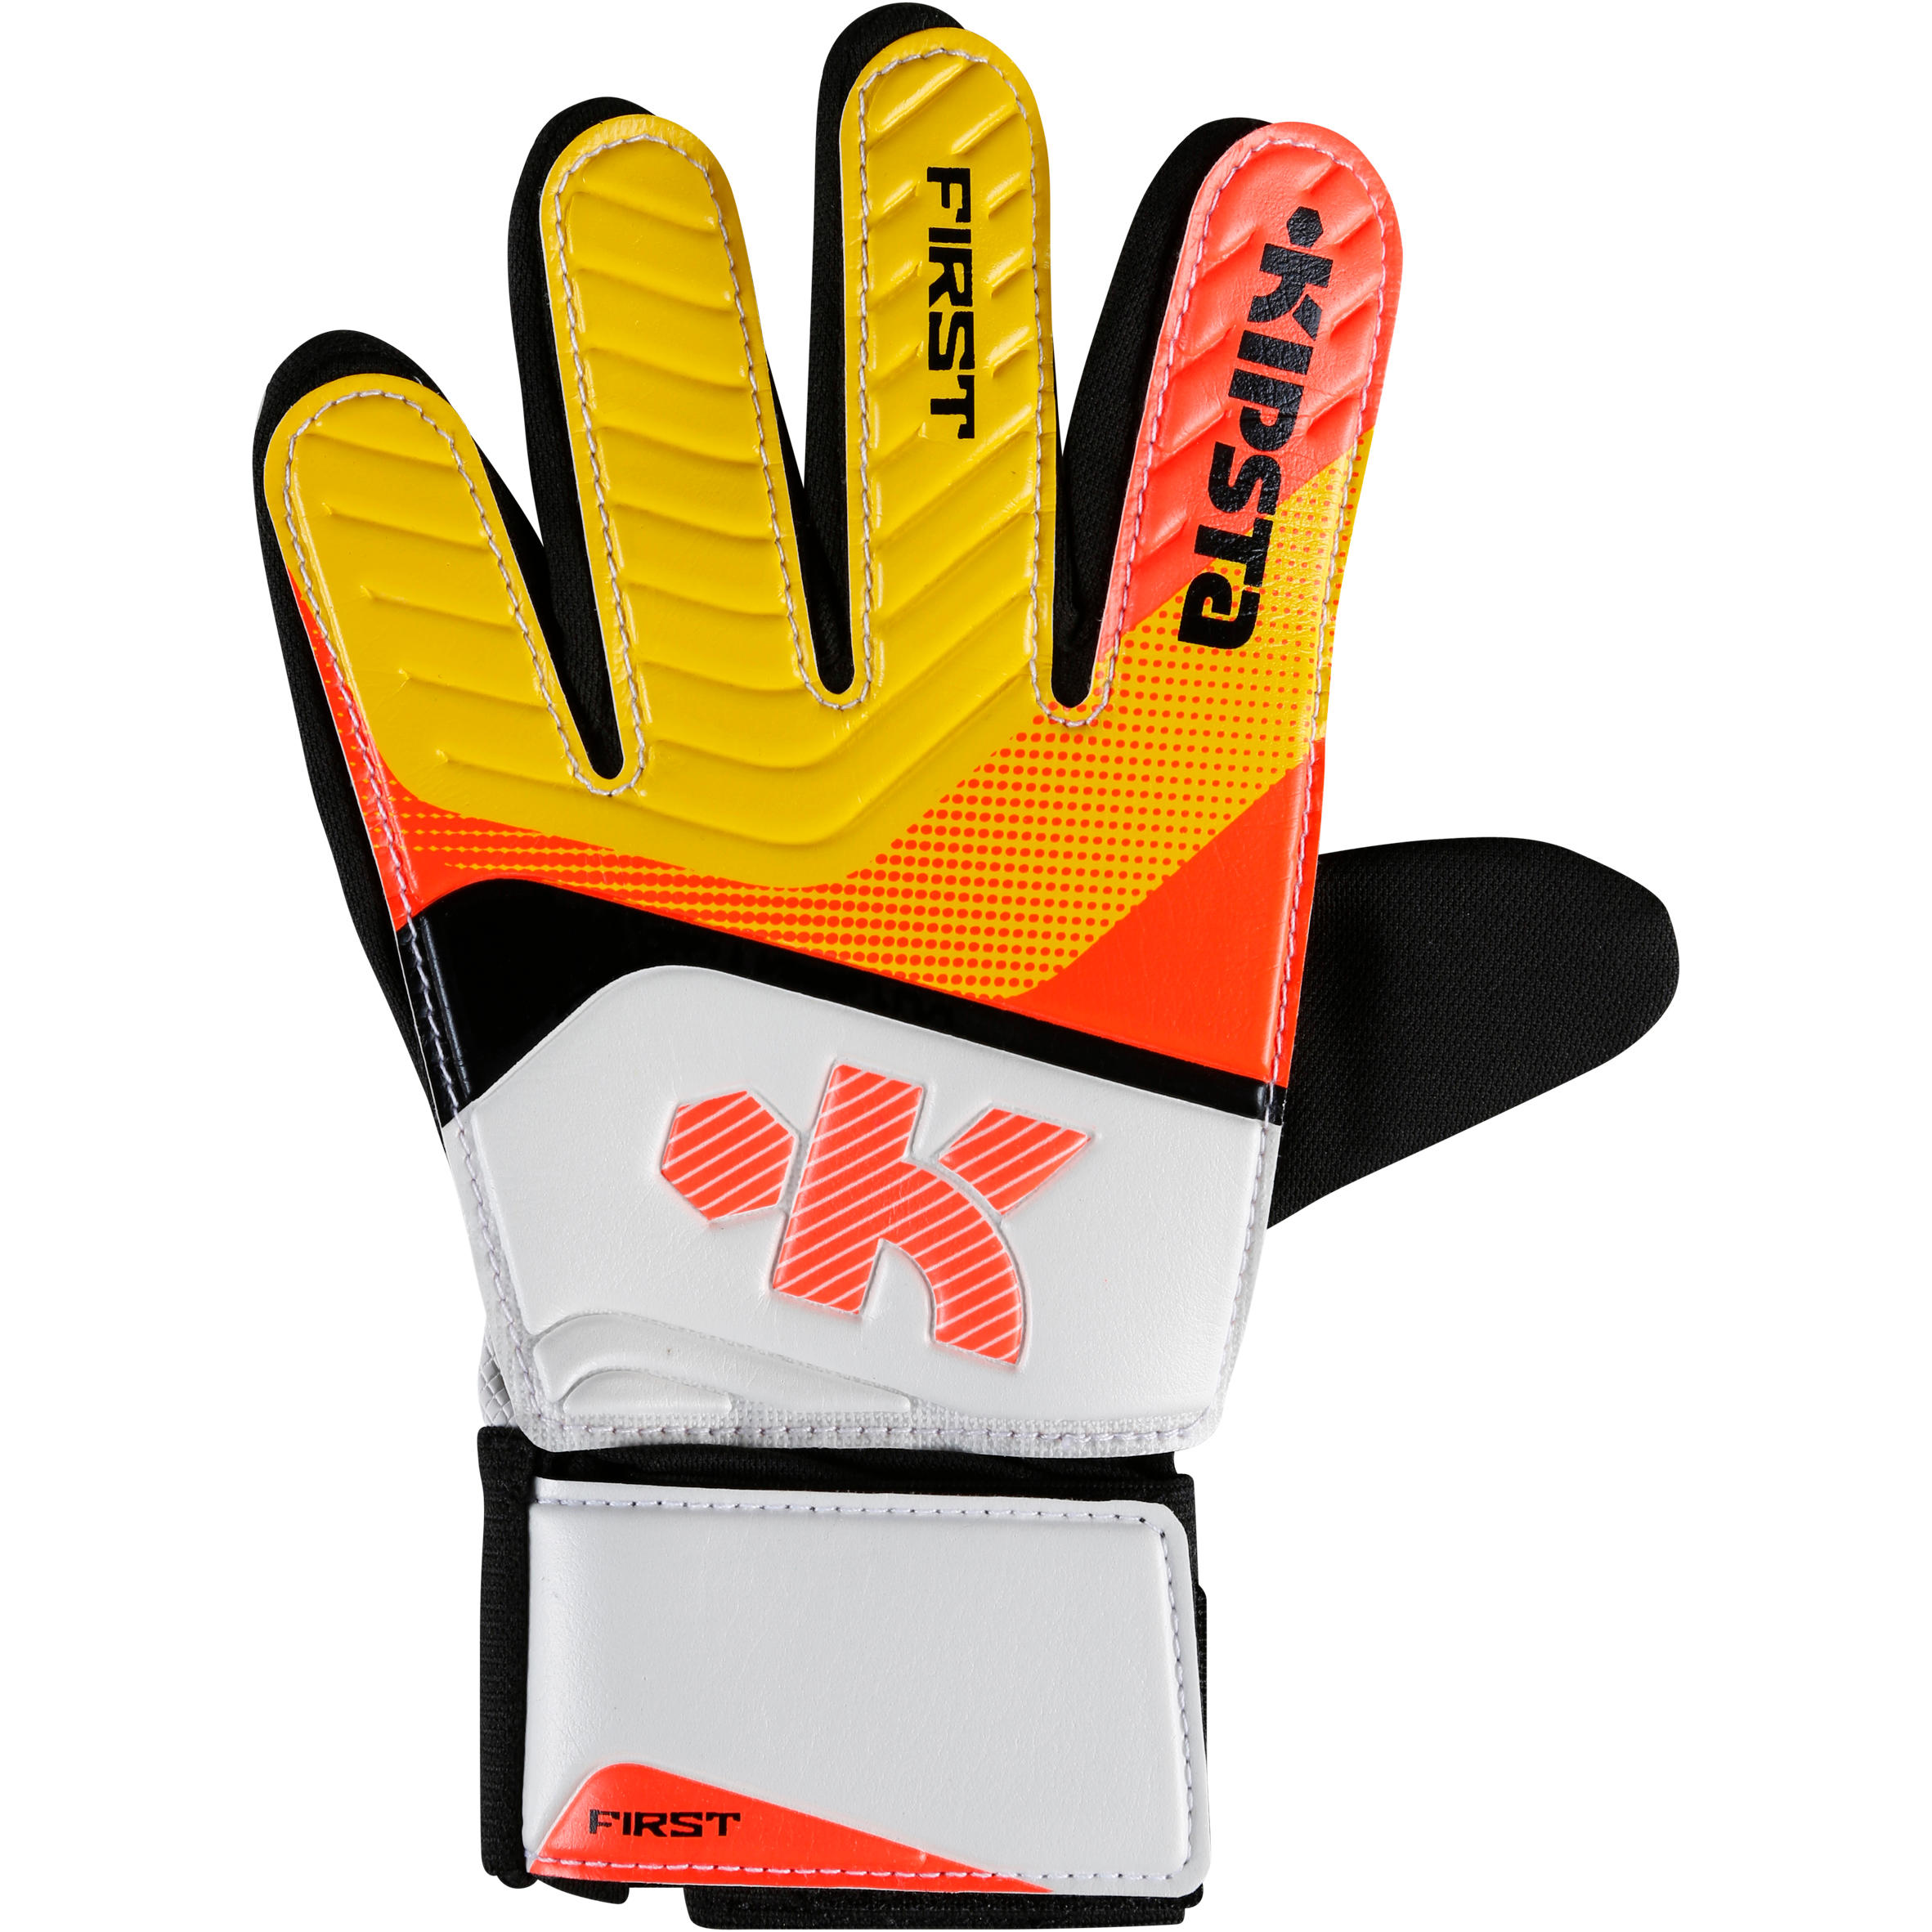 KIPSTA First Junior Goalkeeper Gloves - Red Yellow